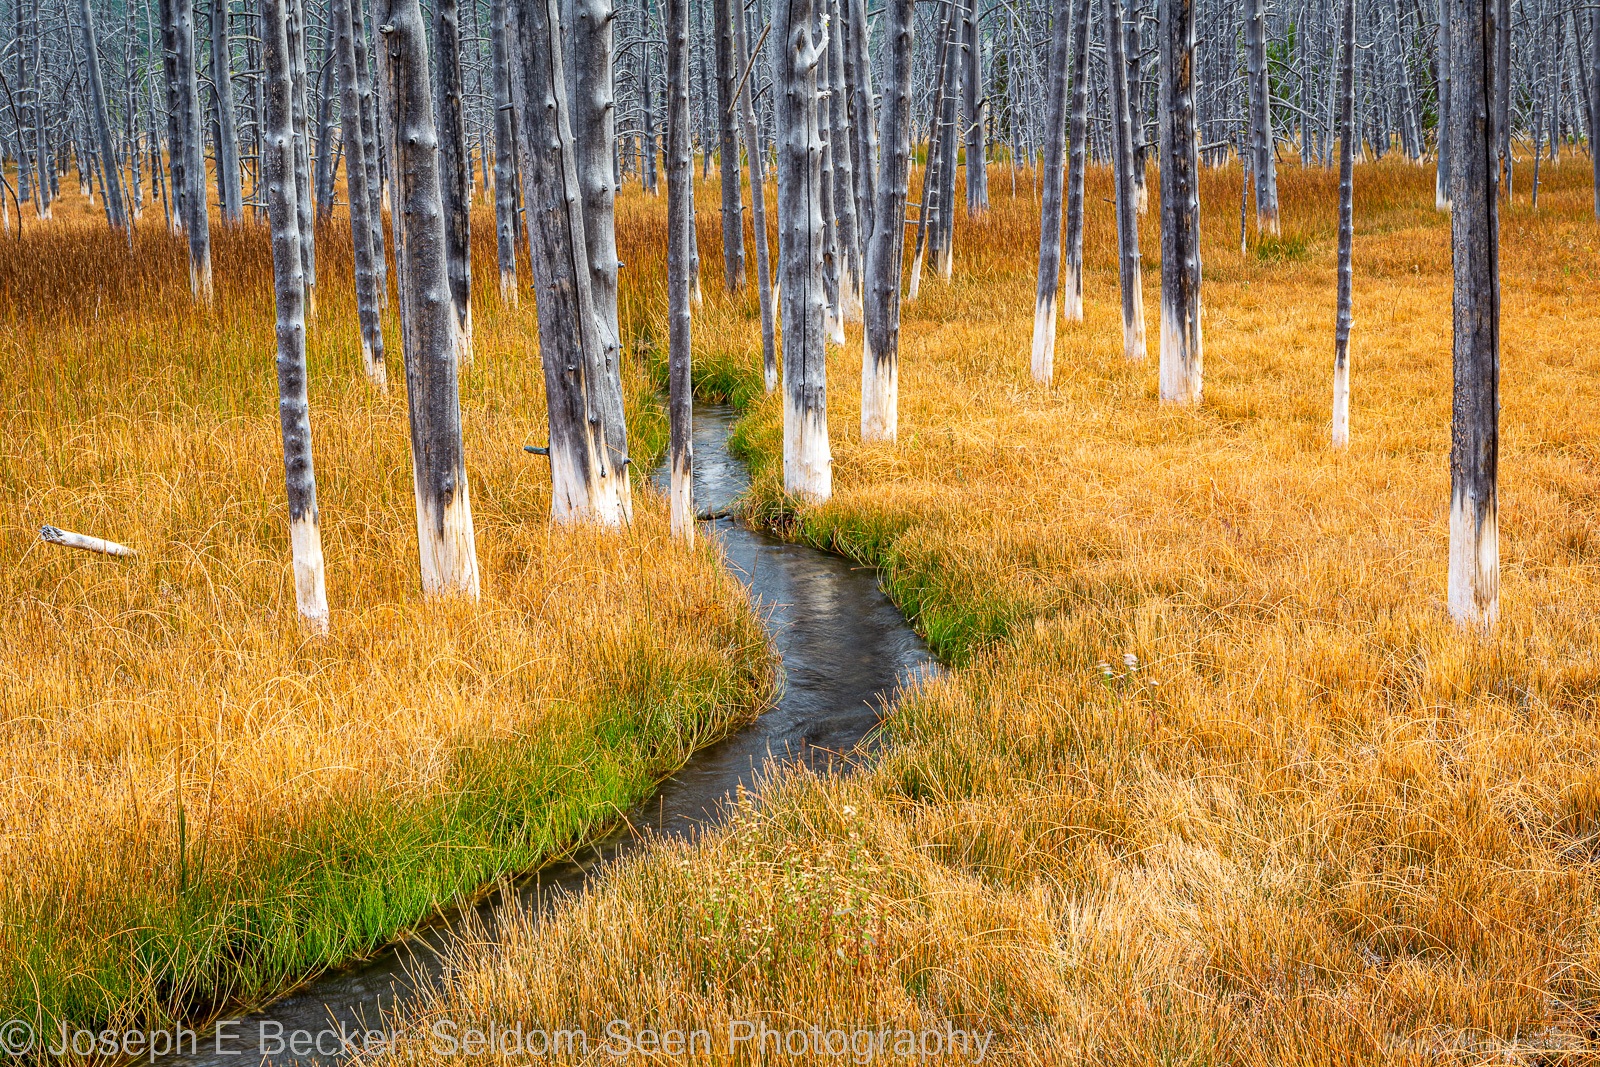 Image of Tangled Creek “Bobby Socks” Trees by Joe Becker